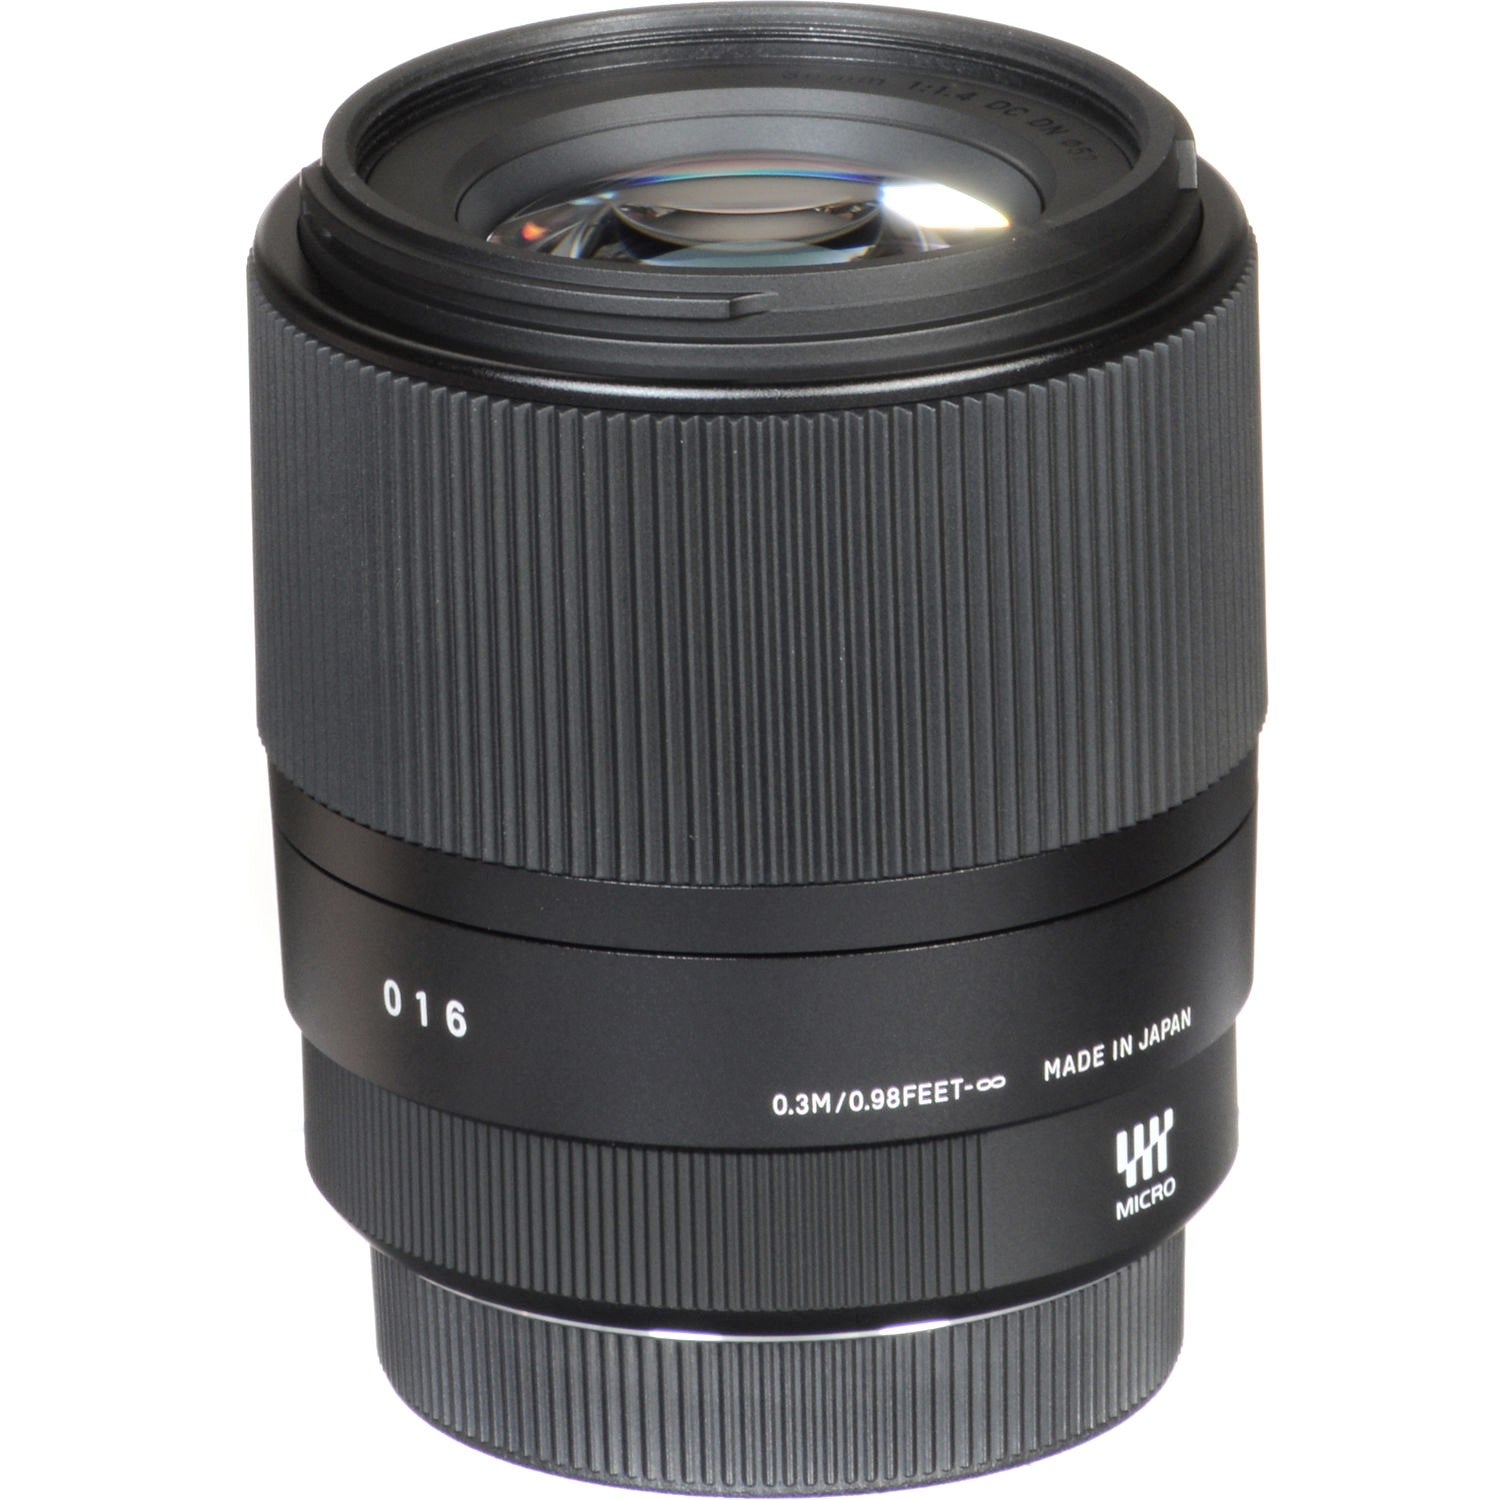  Sigma 30mm F1.4 Contemporary DC DN Lens for Sony E Black :  Electronics